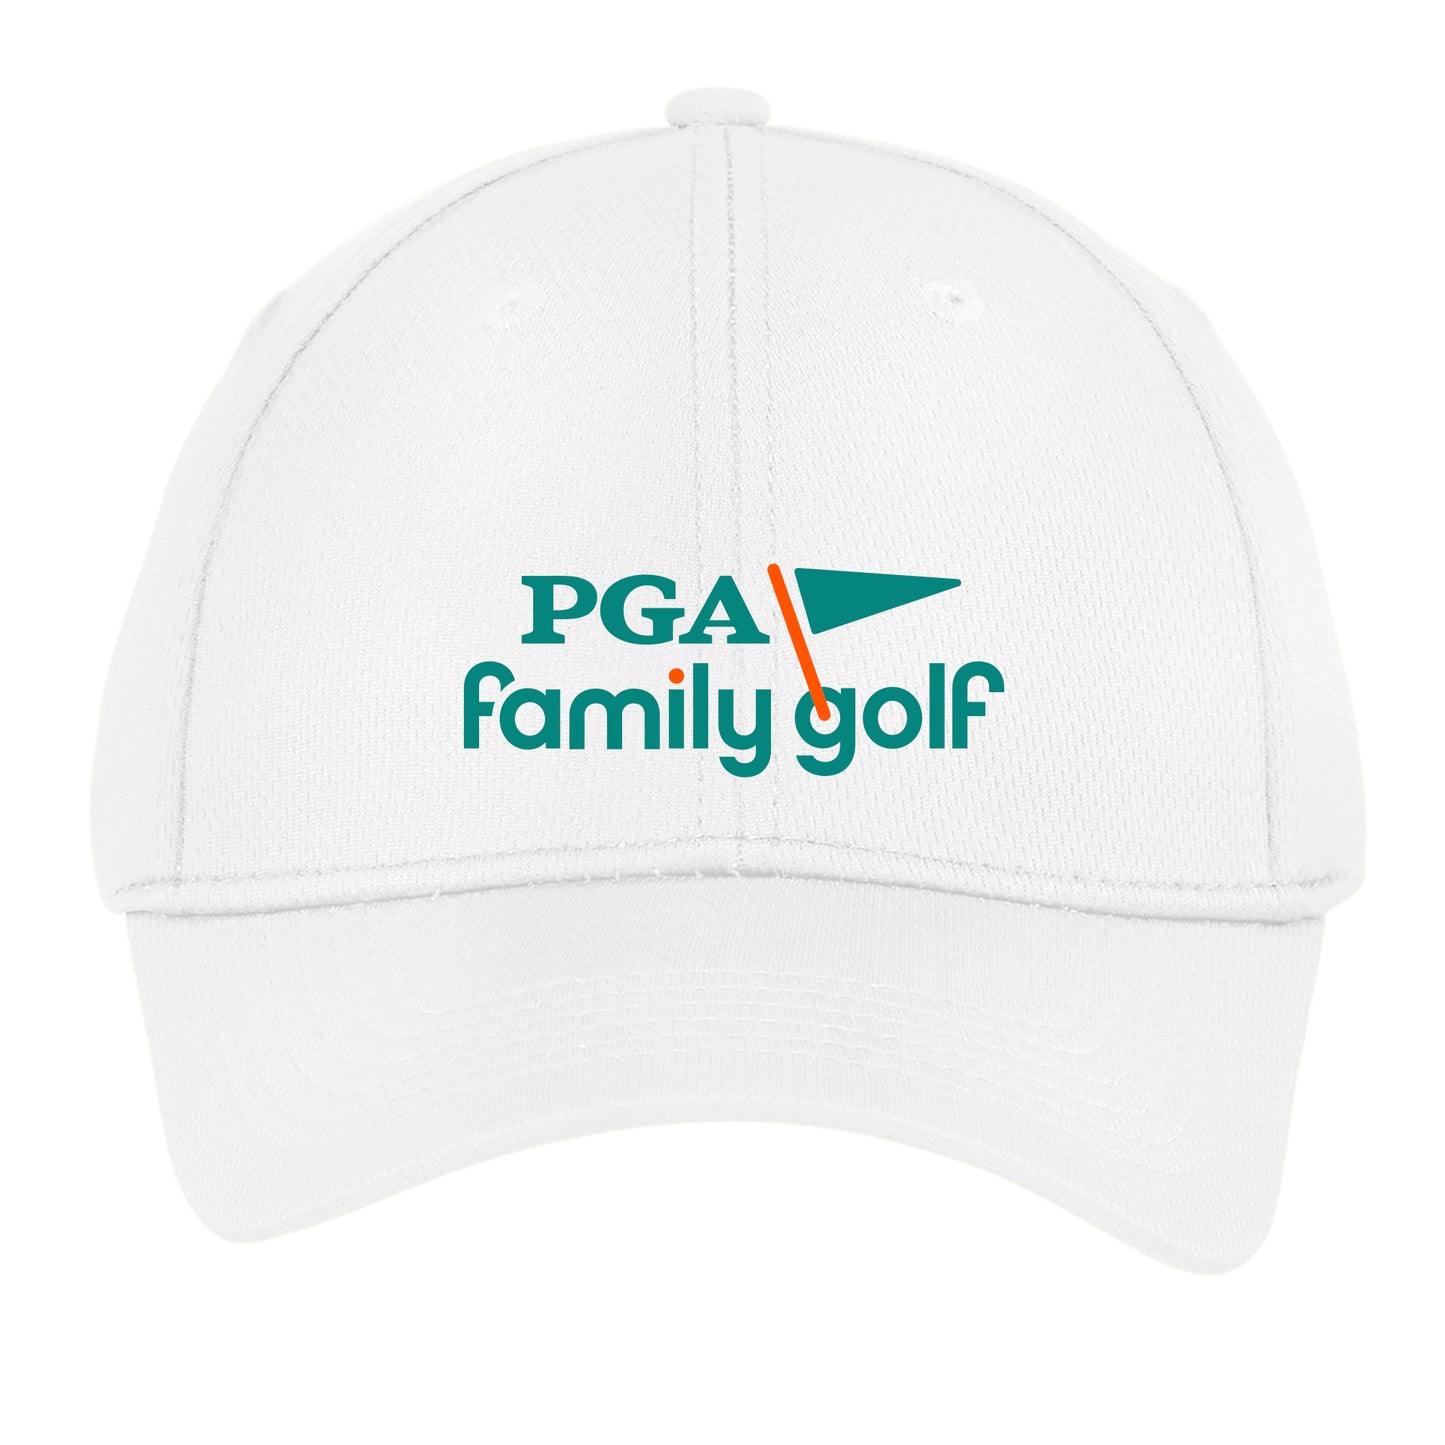 PGA Family Golf Youth Baseball Cap - White